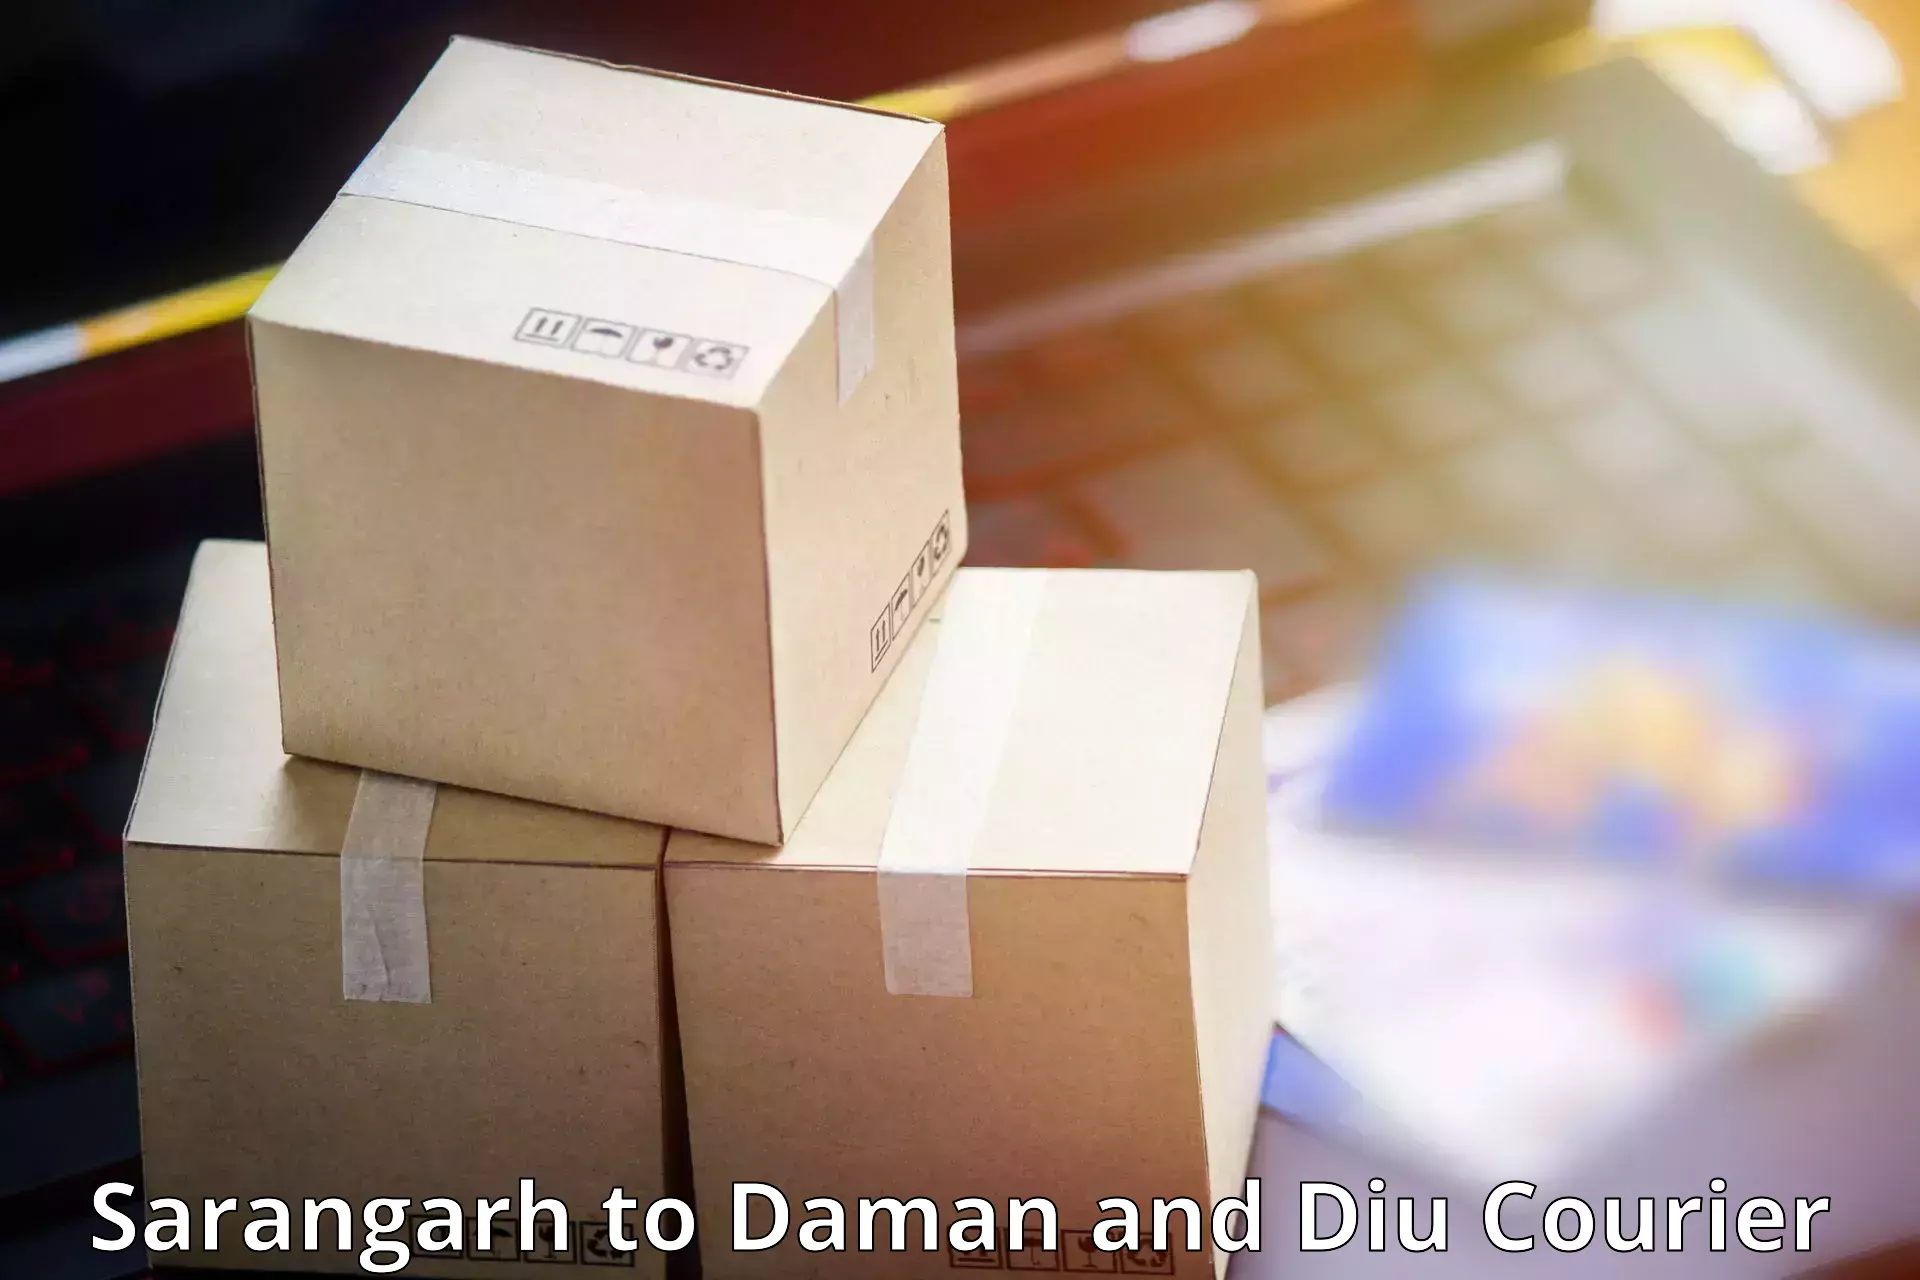 Courier service innovation Sarangarh to Daman and Diu